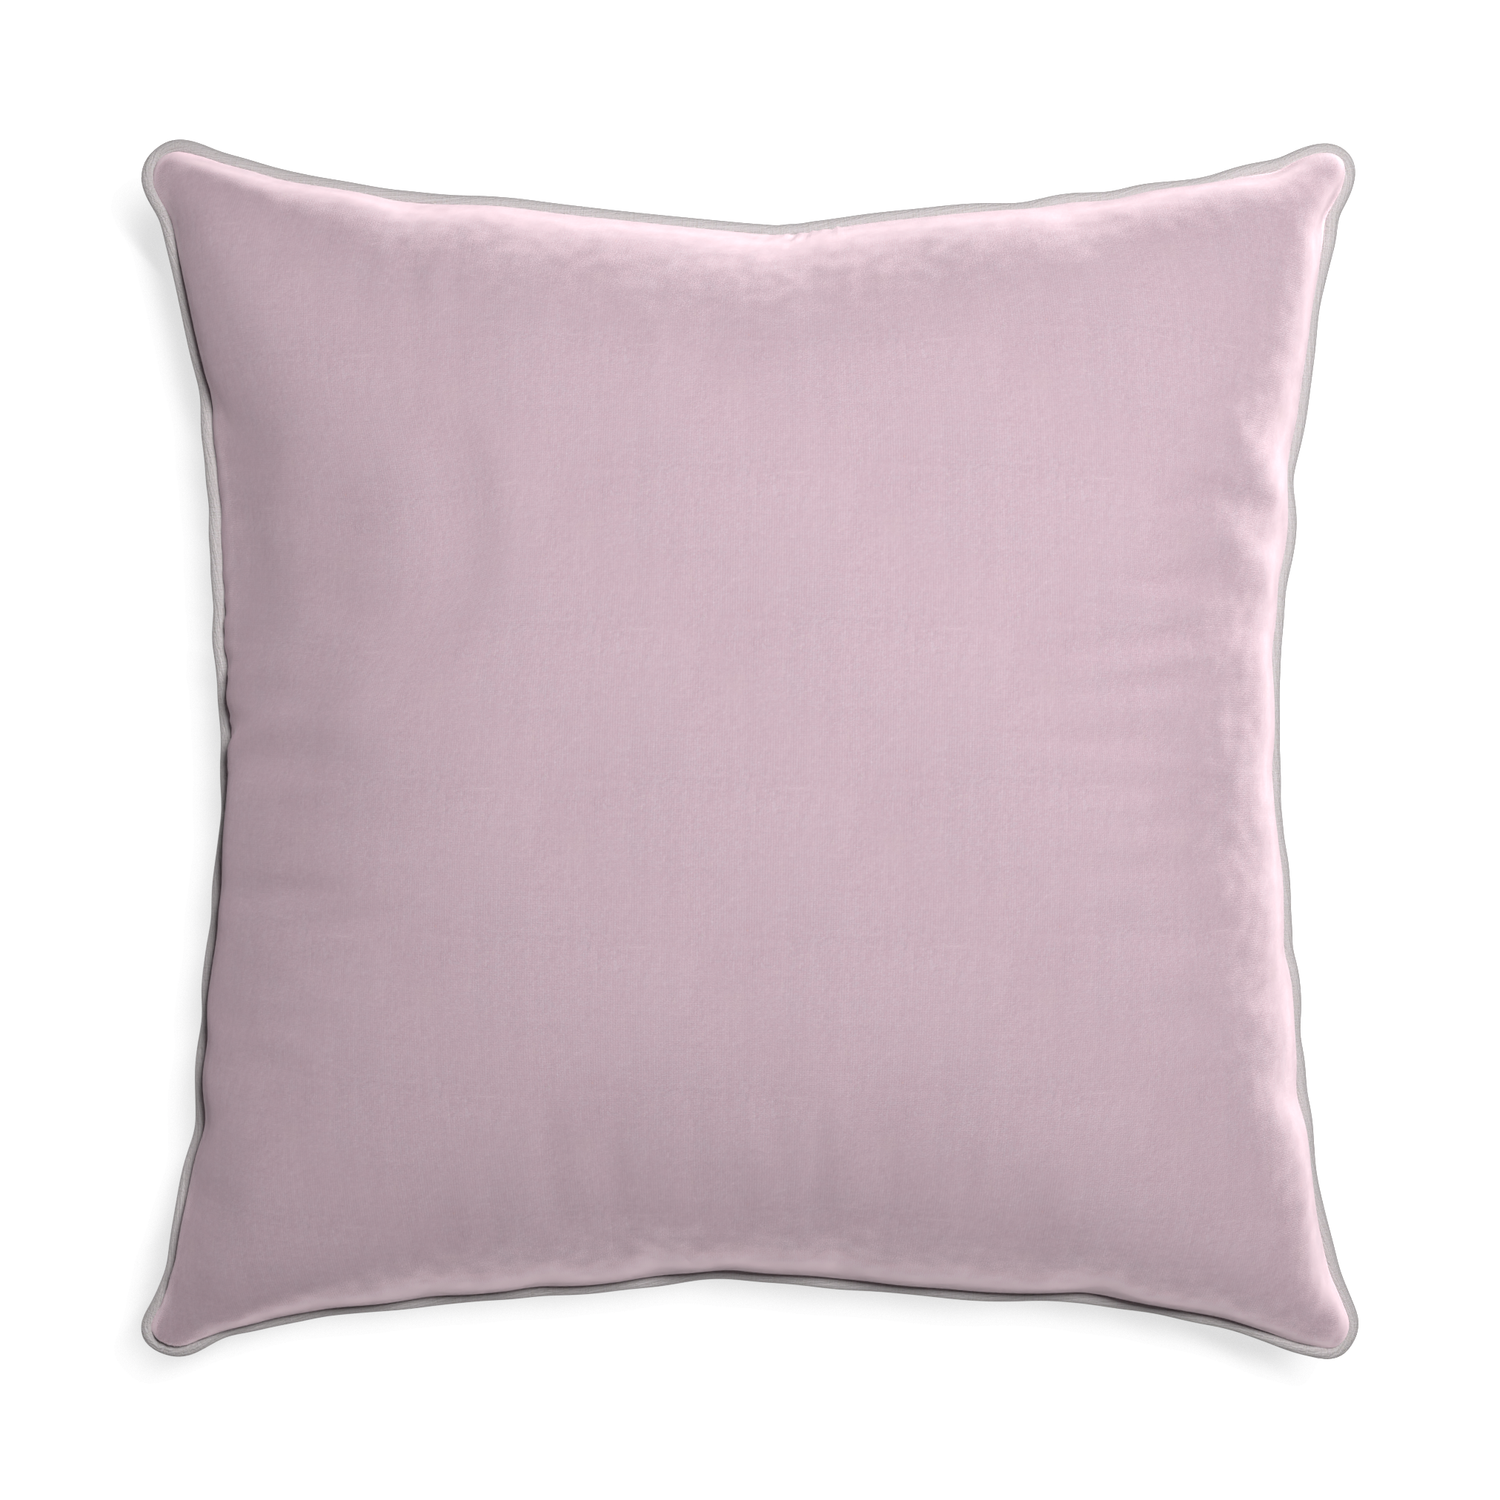 Euro-sham lilac velvet custom pillow with pebble piping on white background